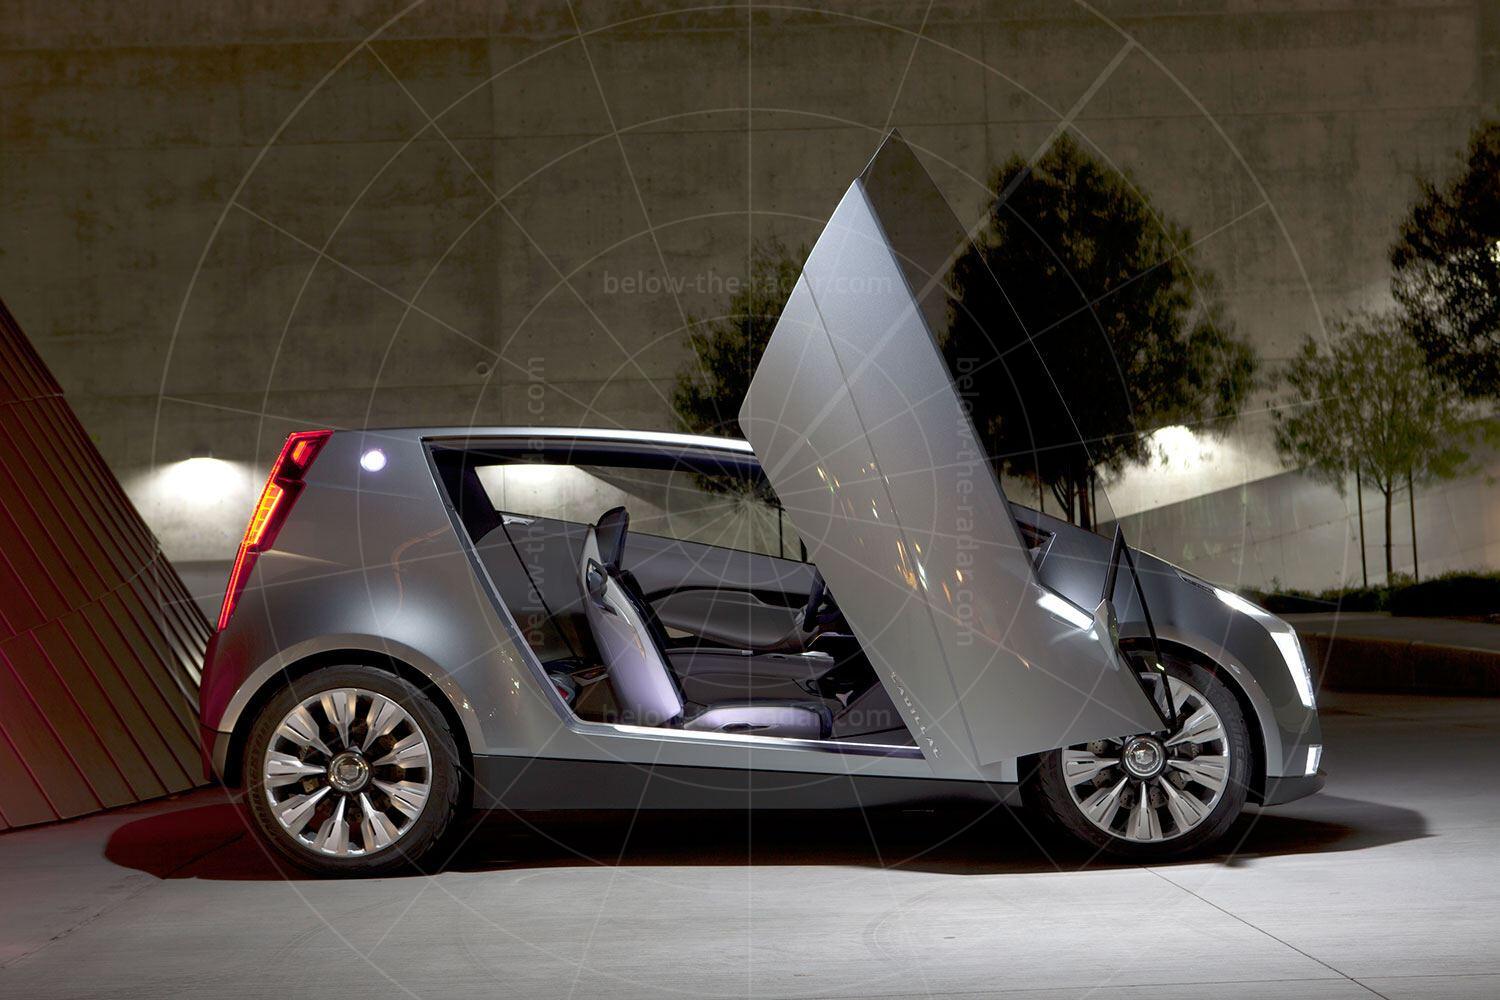 Cadillac Urban Luxury Concept Pic: GM | Cadillac Urban Luxury Concept